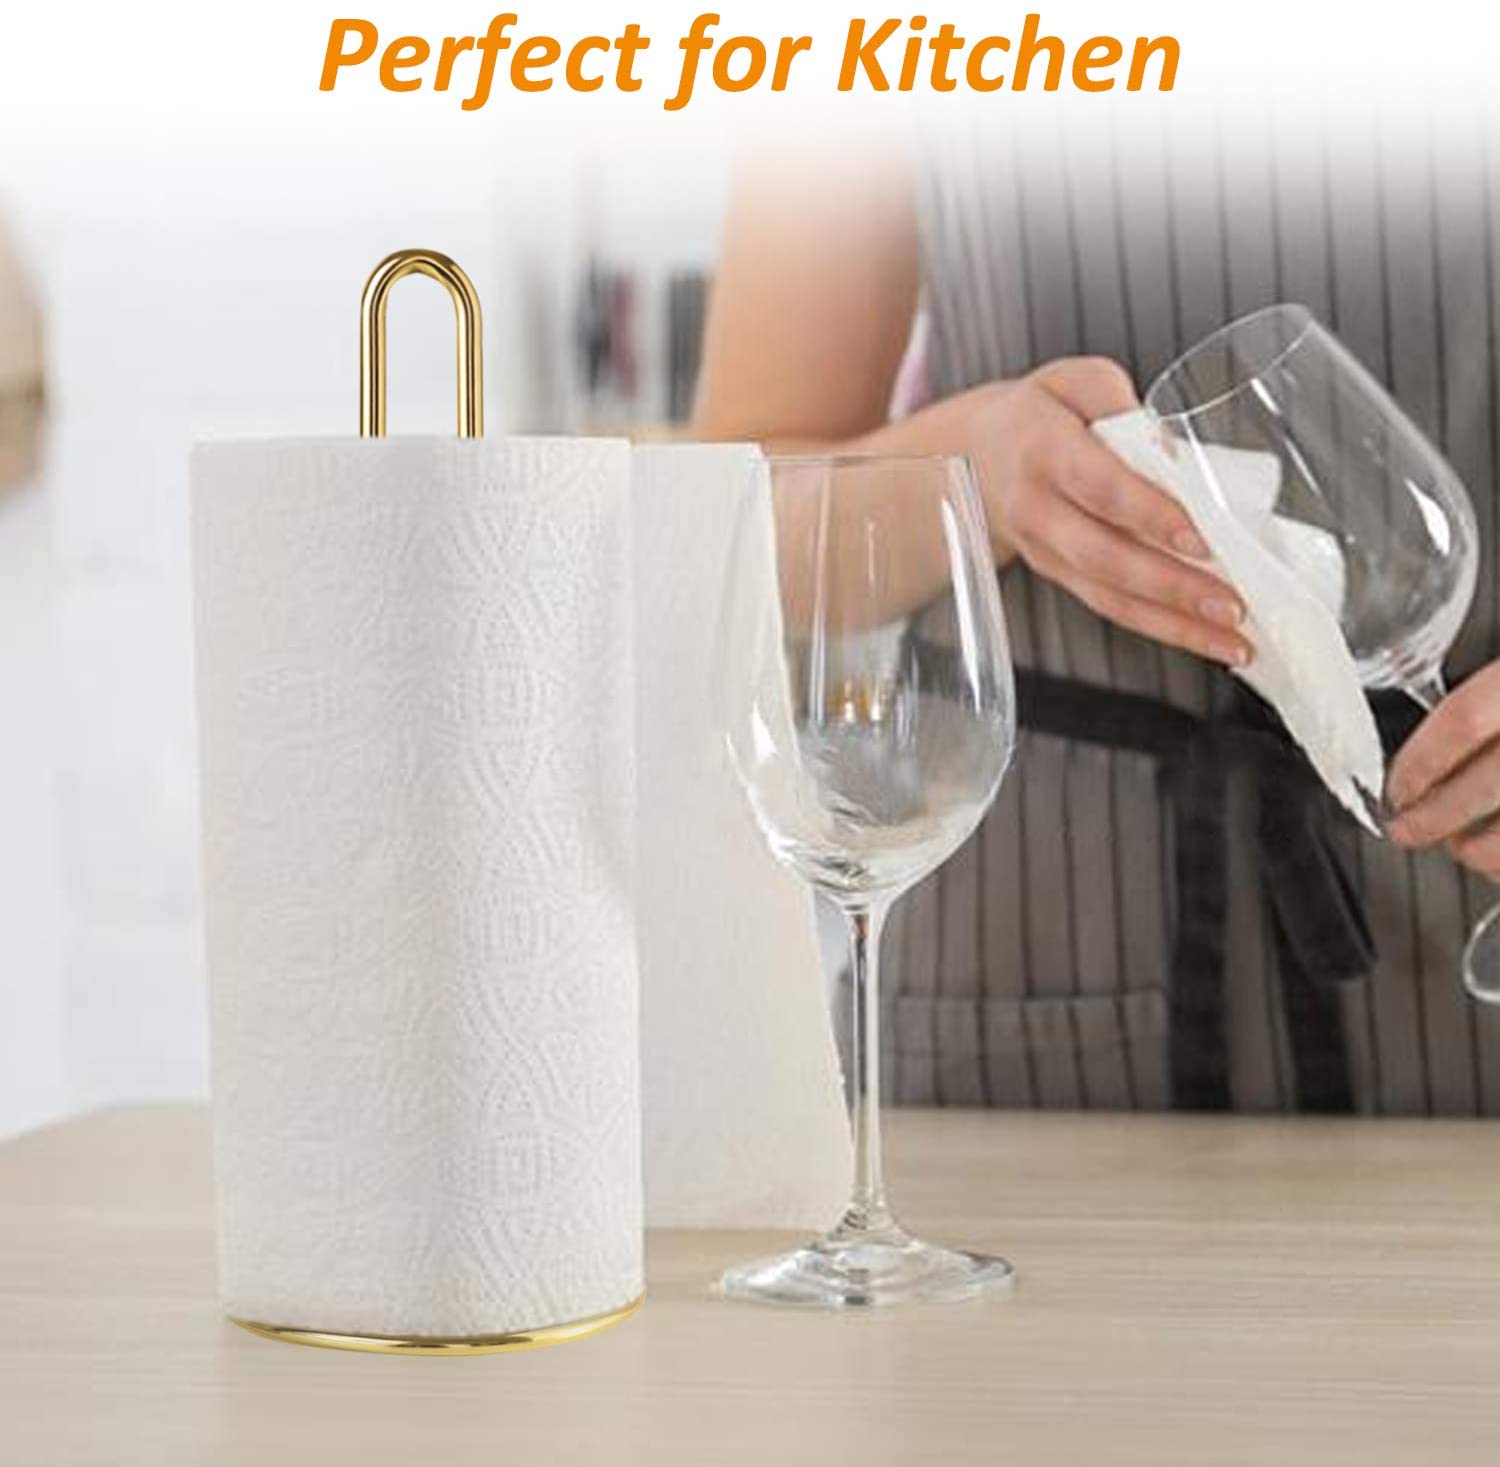 Kitchen paper towel rack online hot sale